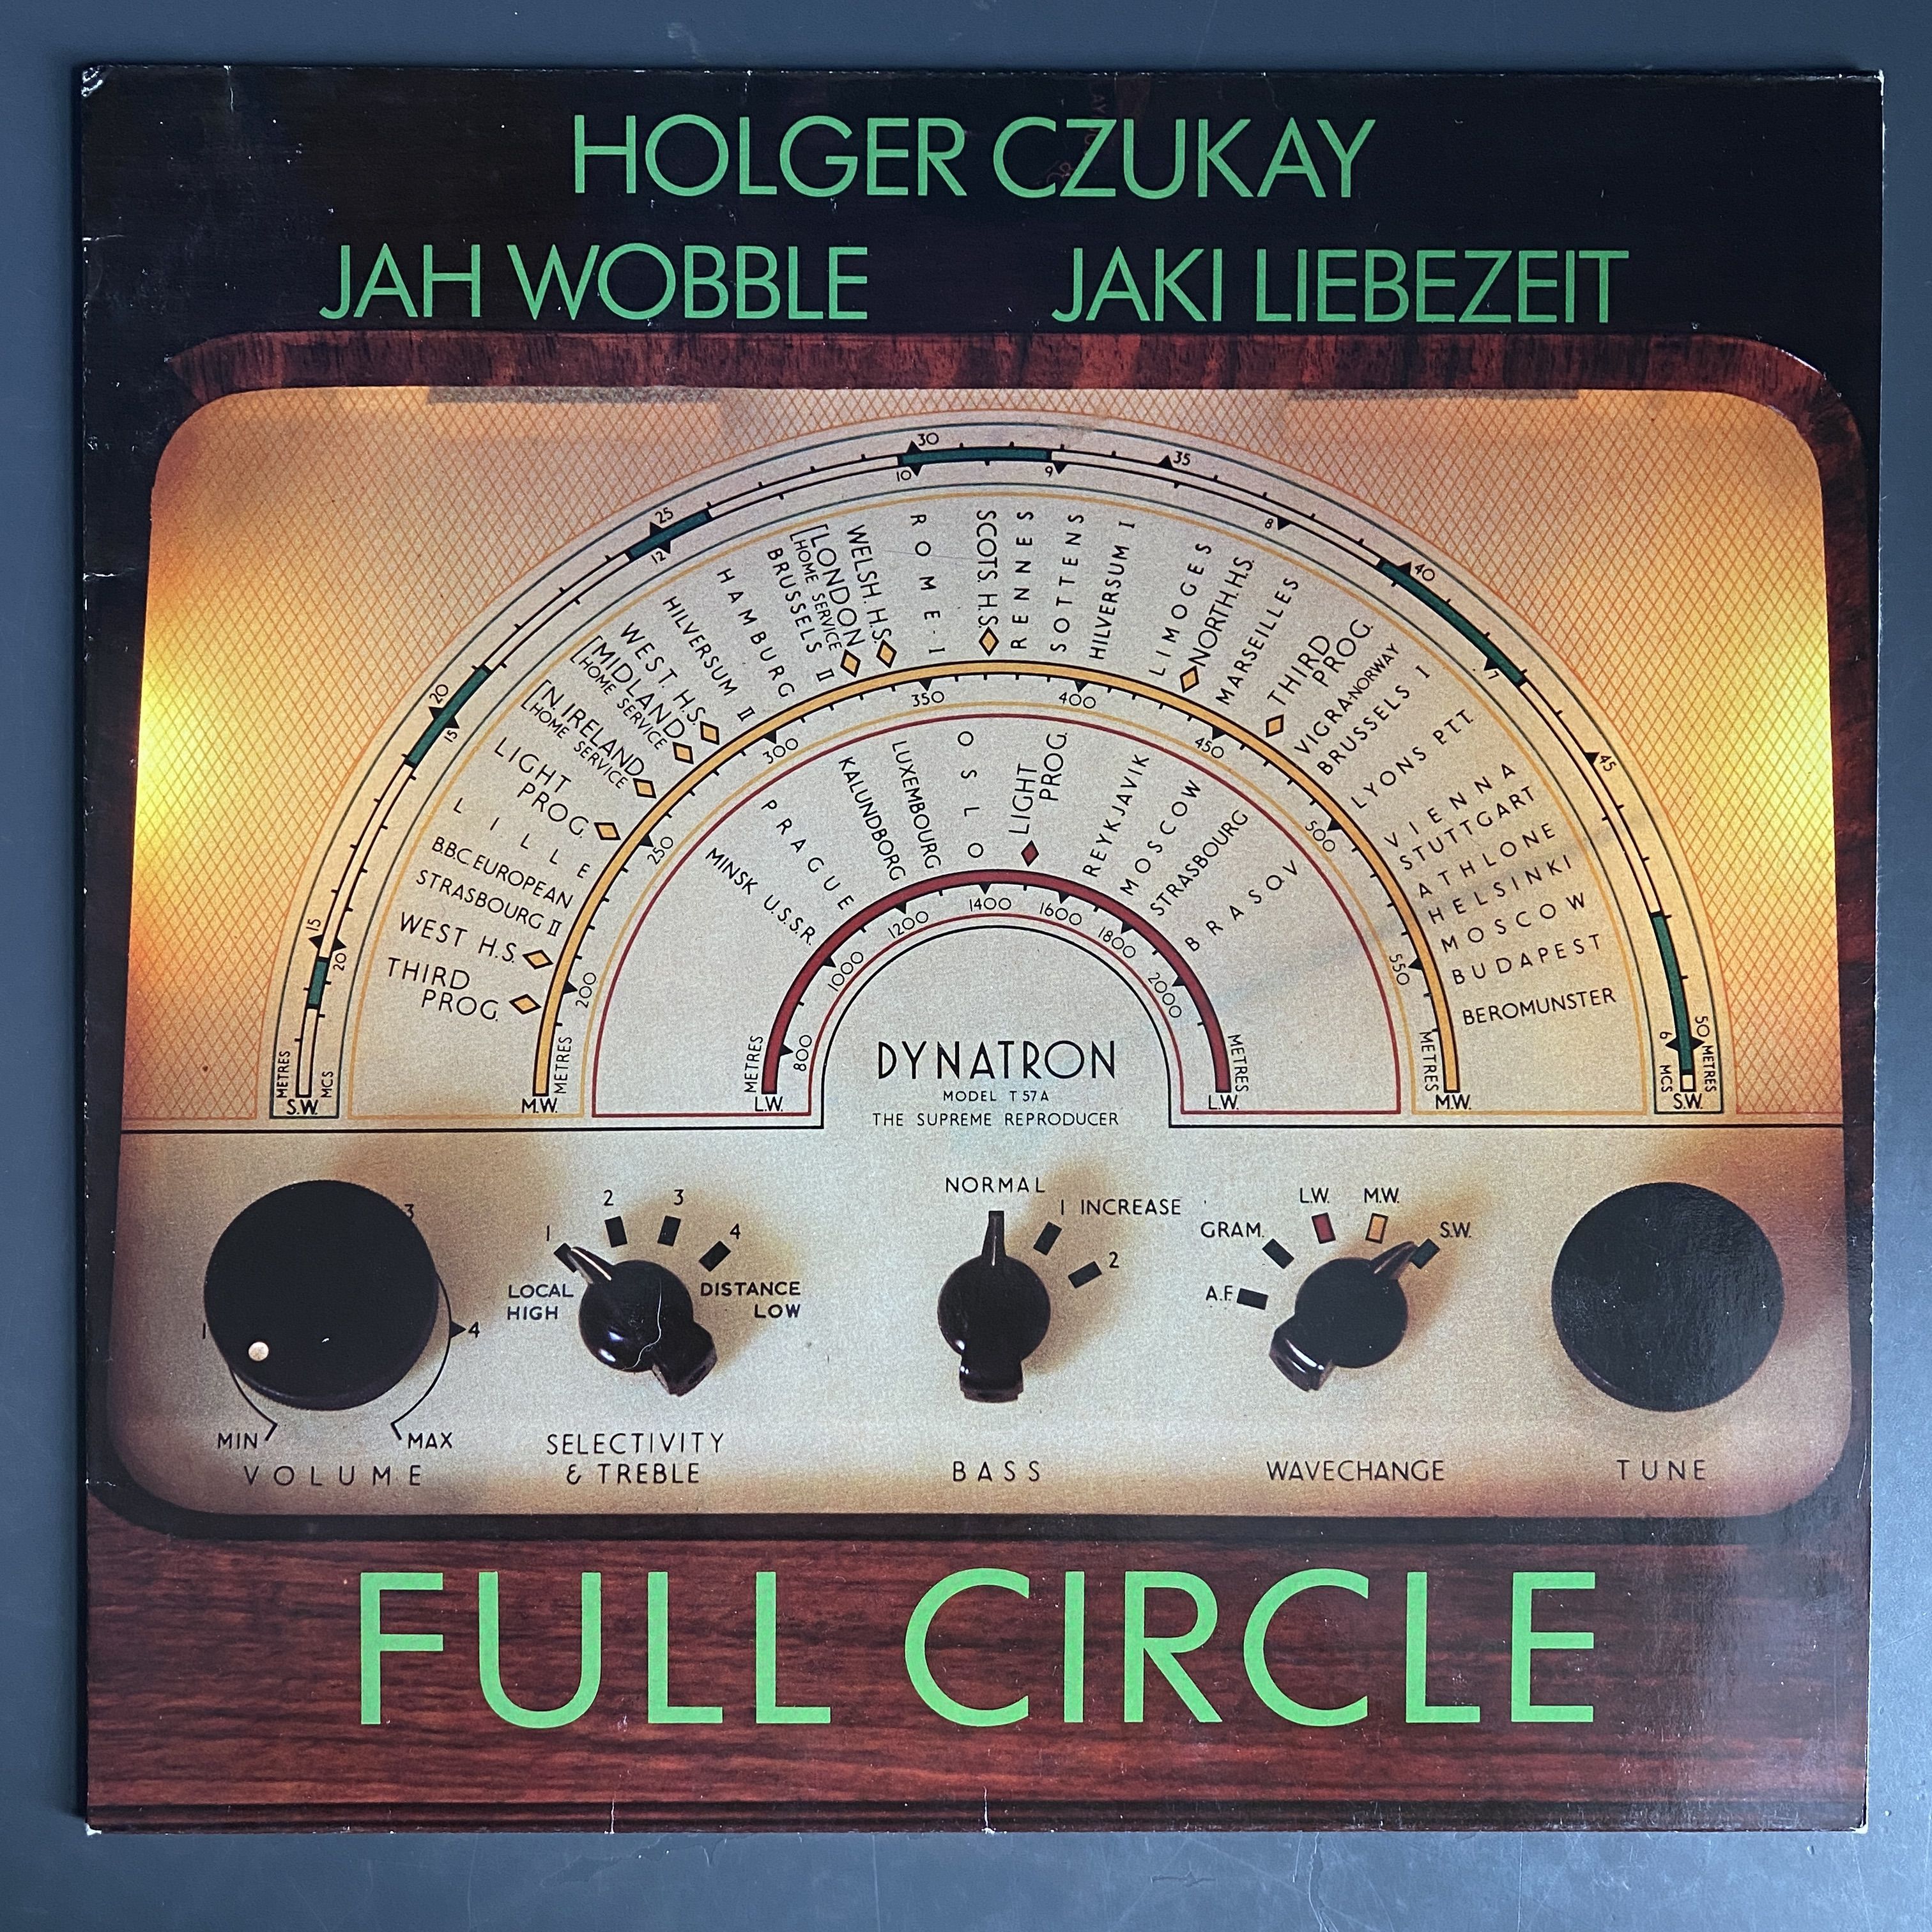 Full tunes. Holger Czukay, Jah Wobble, jaki Liebezeit\Holger Czukay, Jah Wobble, jaki Liebezeit - Full circle. Holger Czukay, Jah - Full circle LP. Jah Wobble. Jah Wobble 1996 - Heaven & Earth.